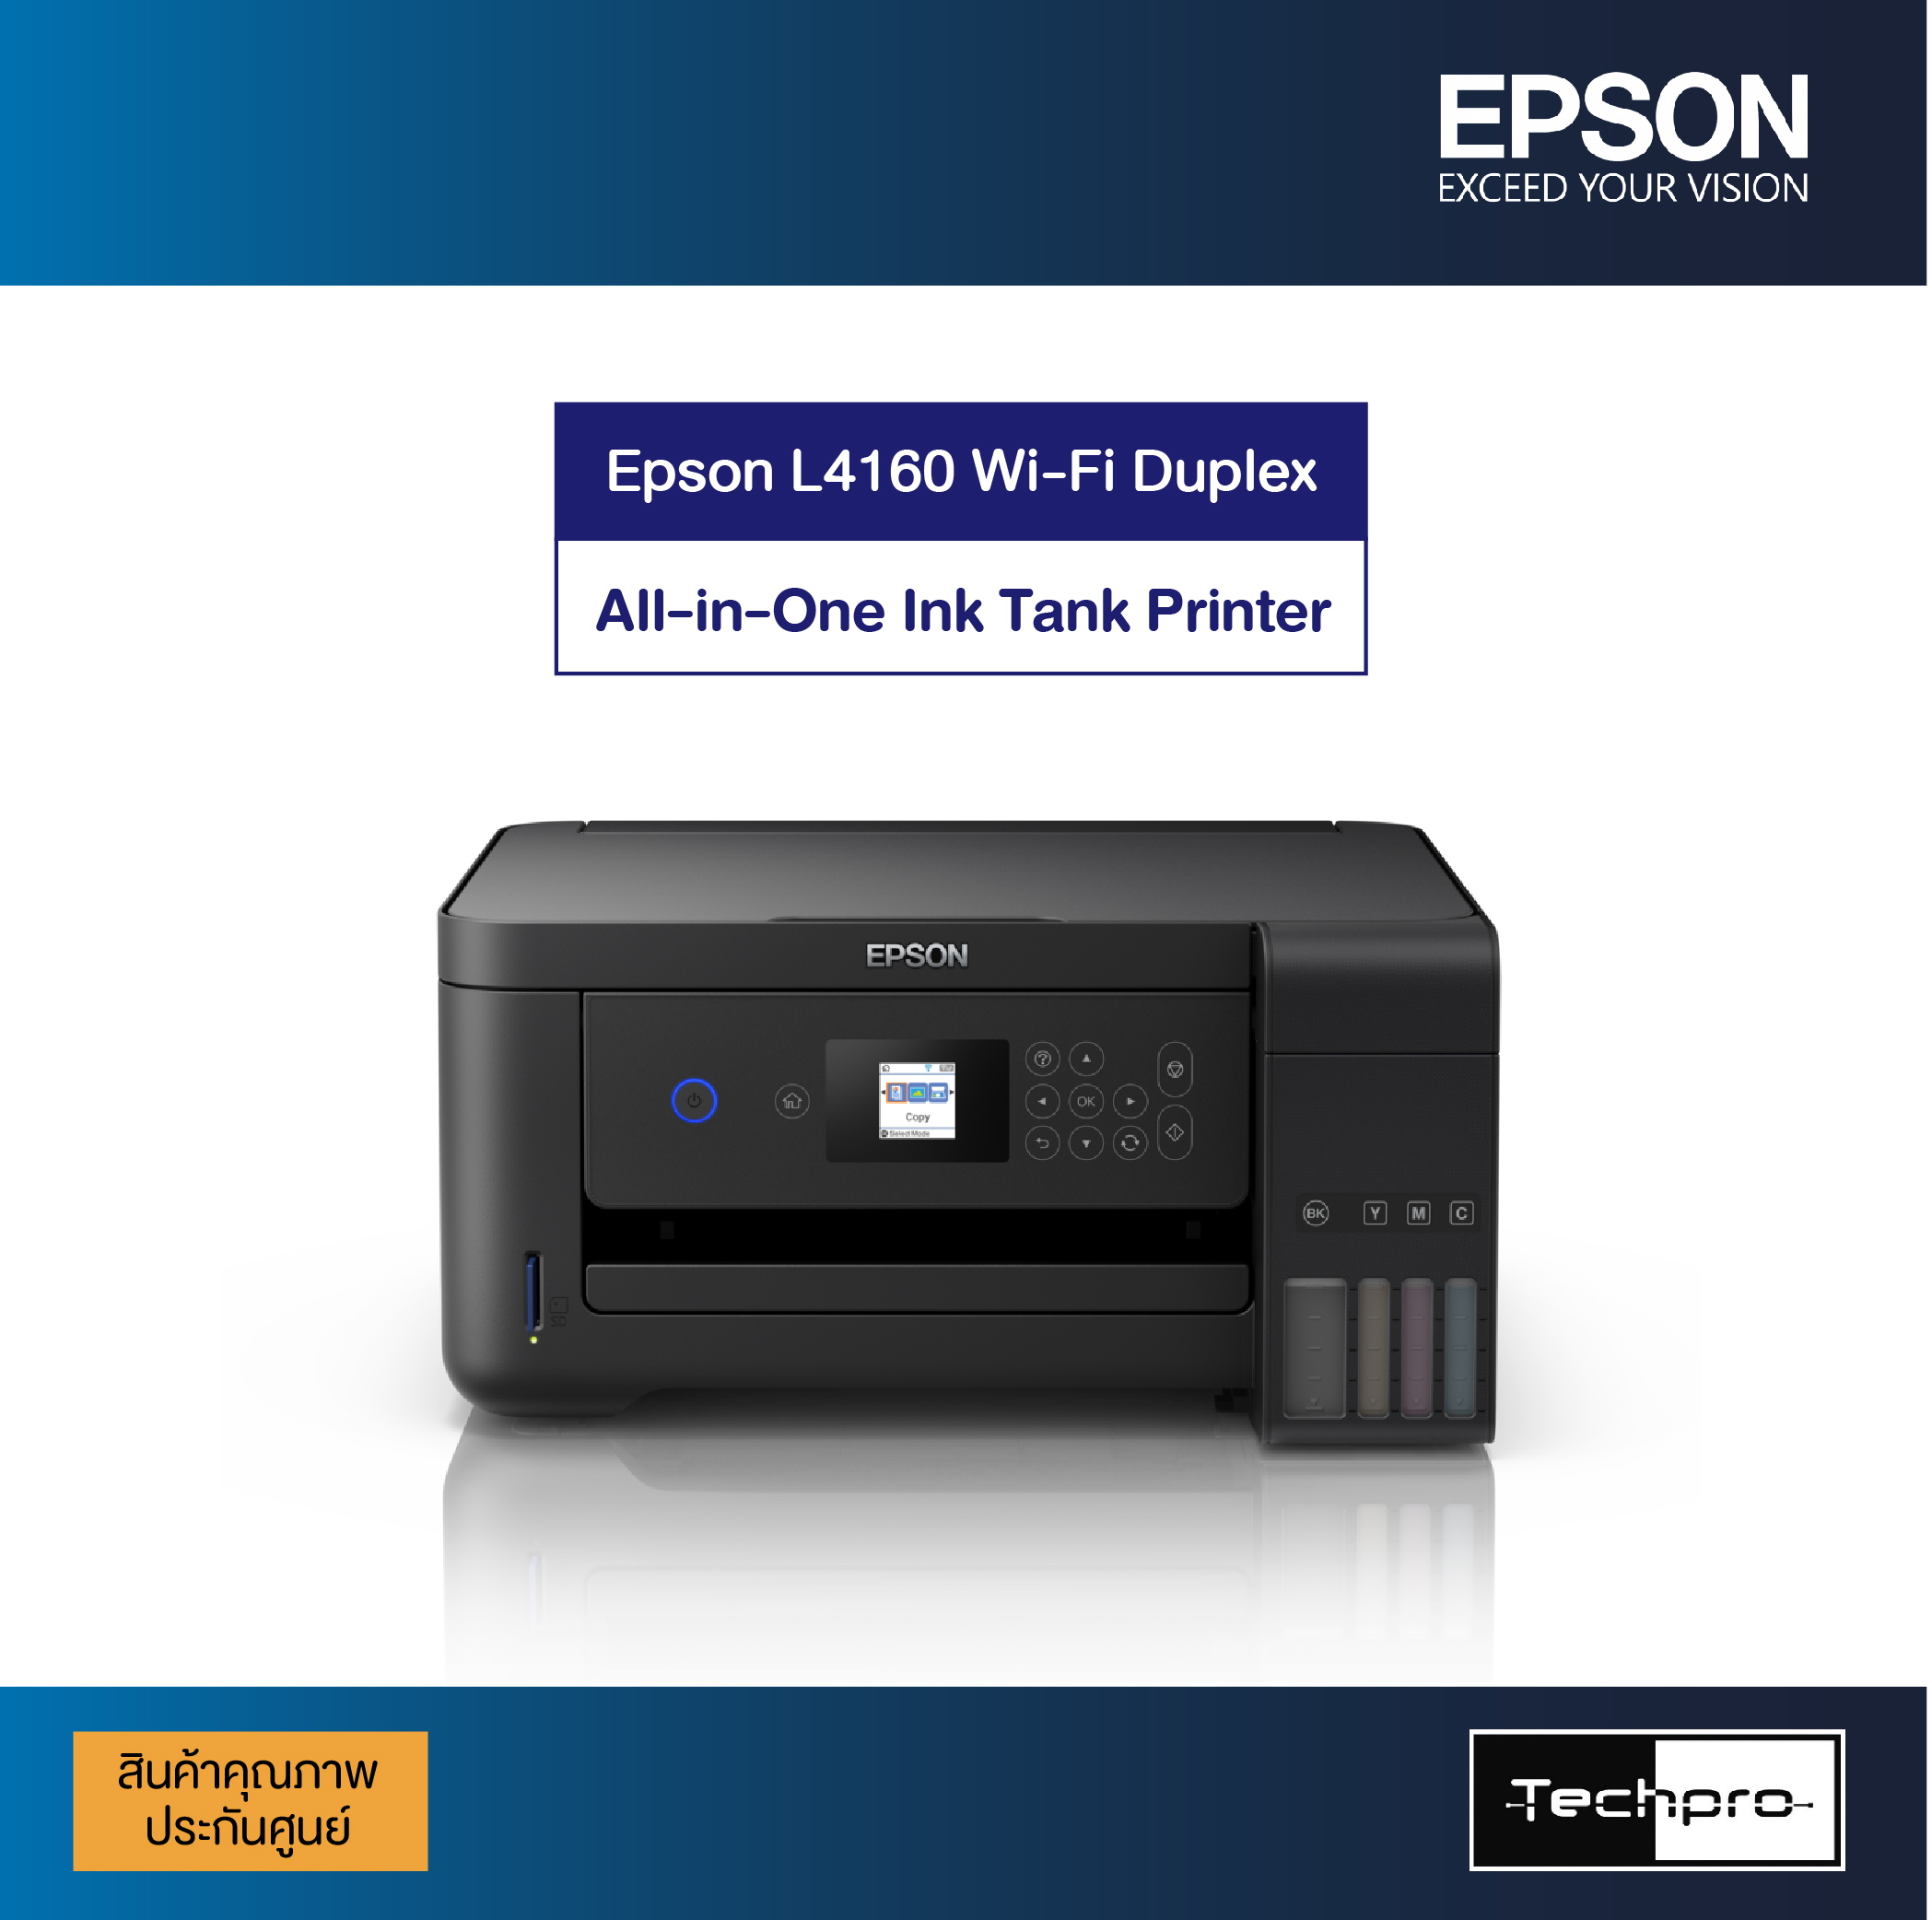 Epson L4160 Wi Fi Duplex All In One Ink Tank Printer Techpro 8591